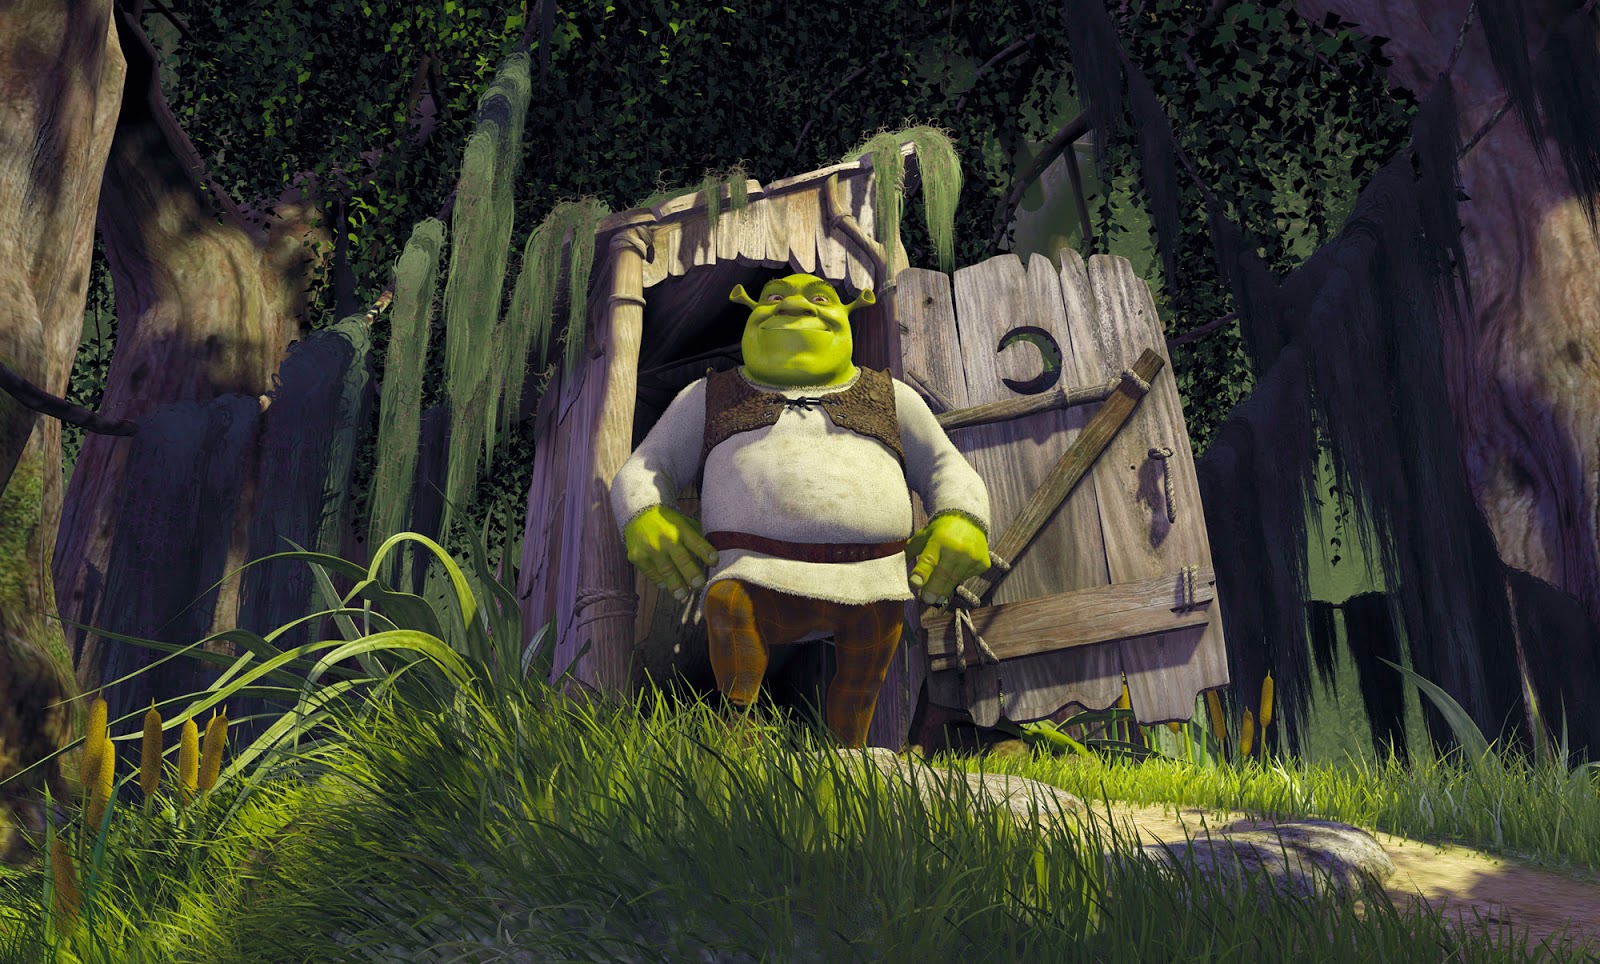 One Momma Saving Money DreamWorks Animation's Shrek 15th Anniversary on Digital HD May 16th